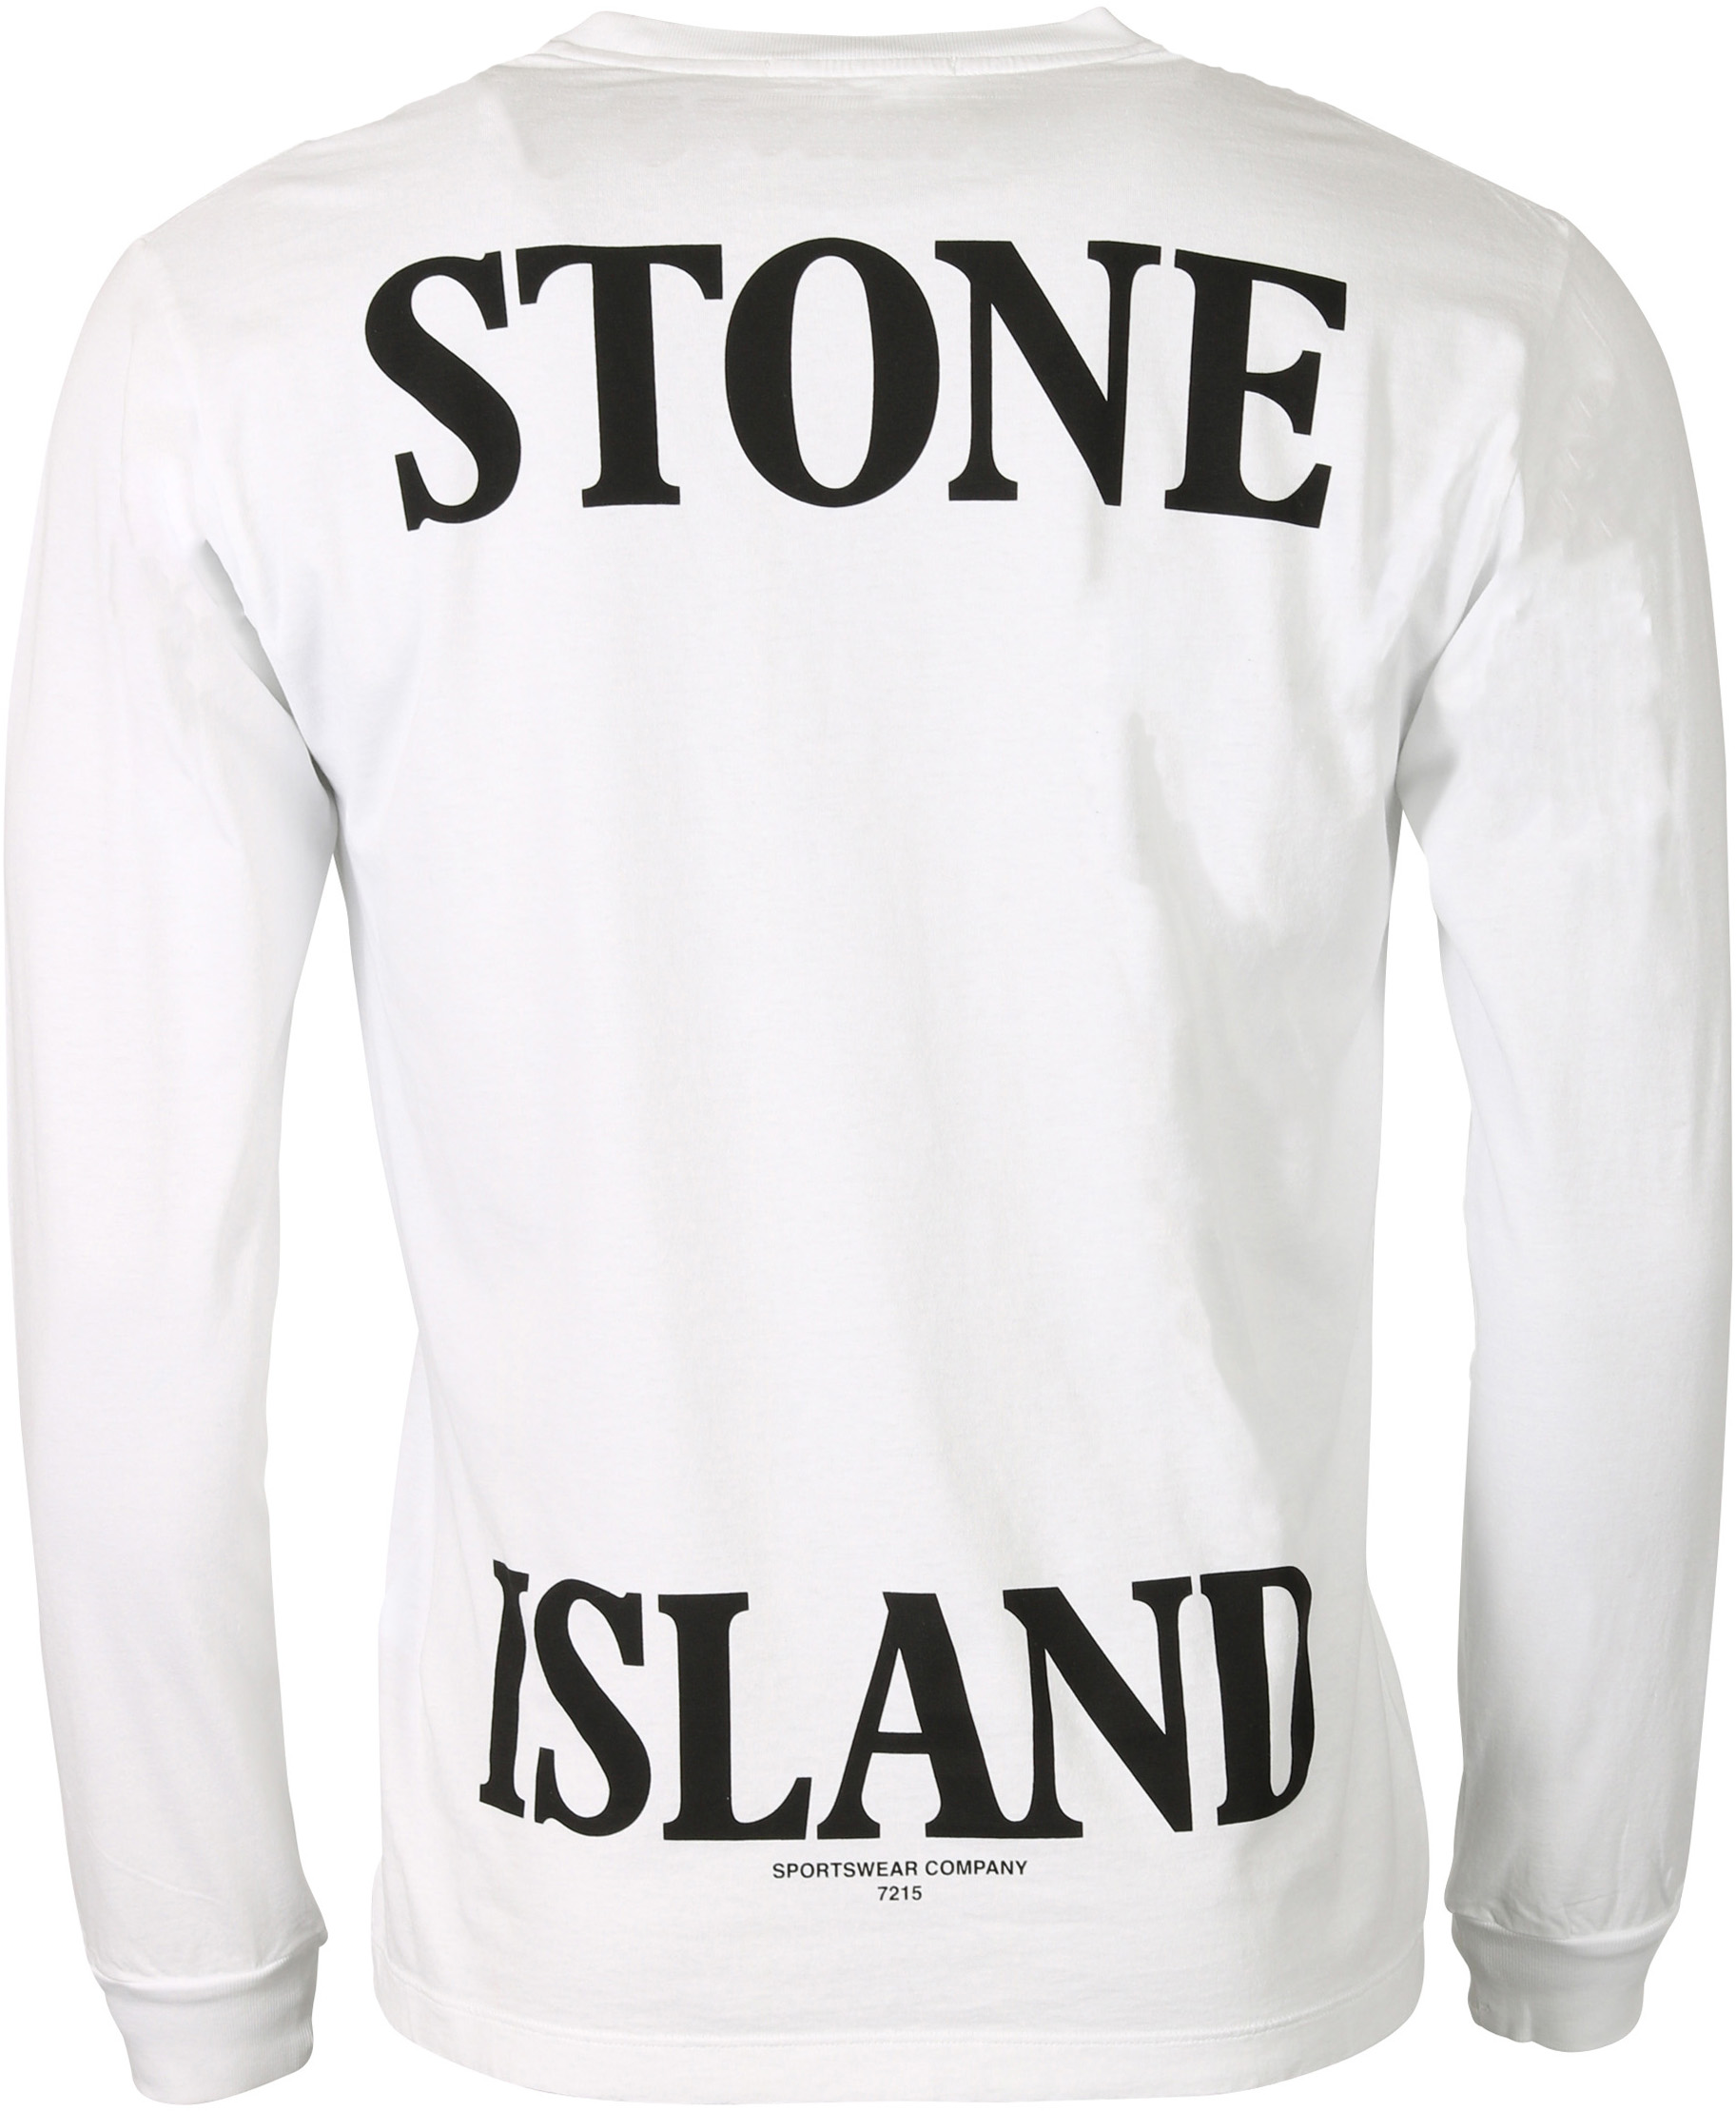 Stone Island Longsleeve White Printed XXXL